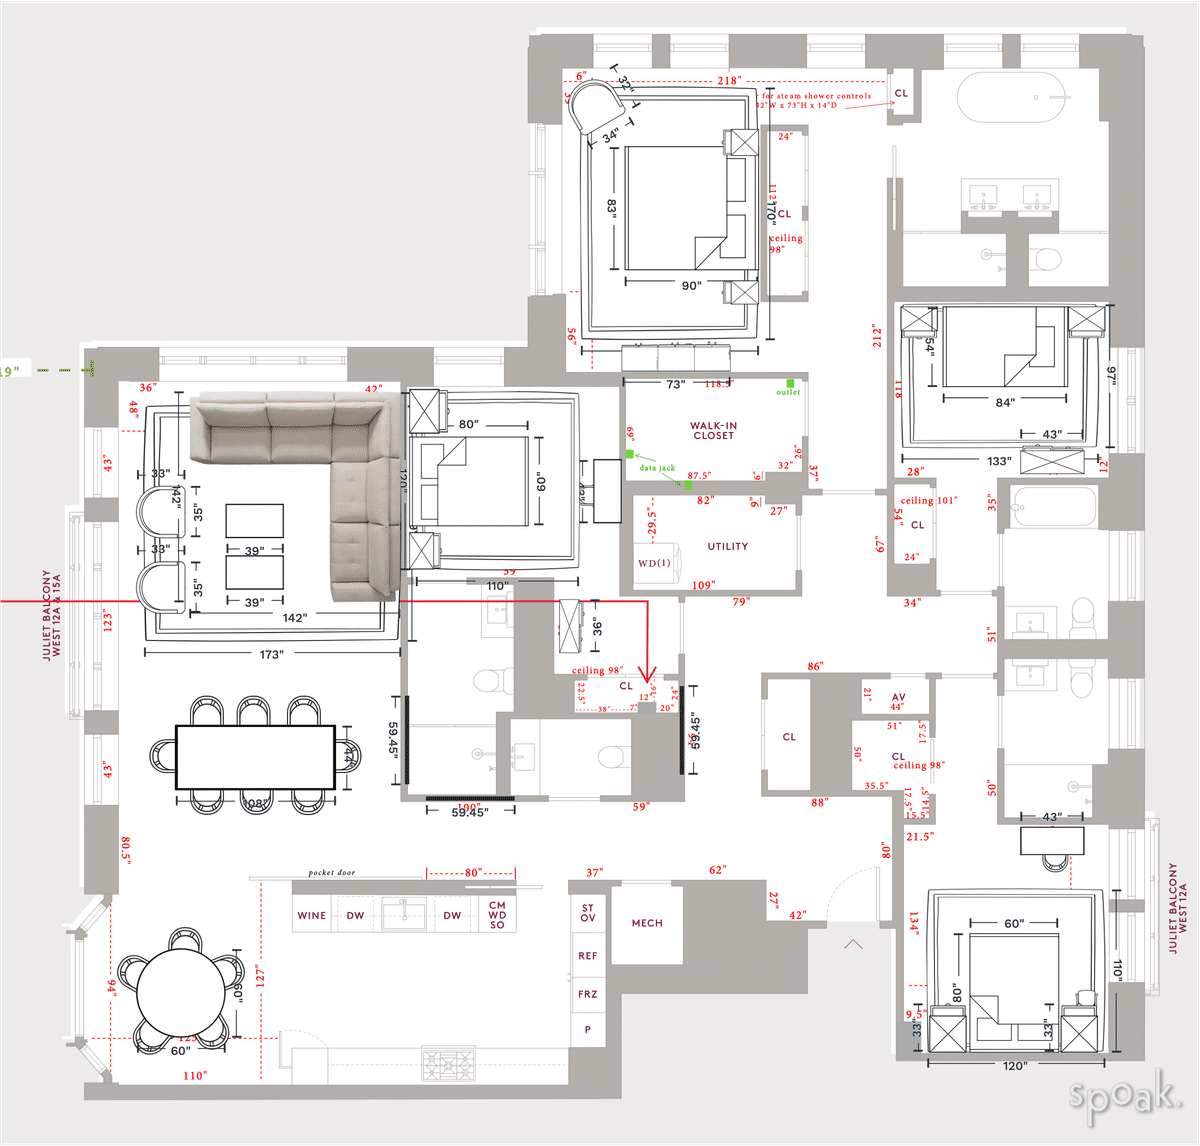 Studio Apartment Plan designed by Christian Potter